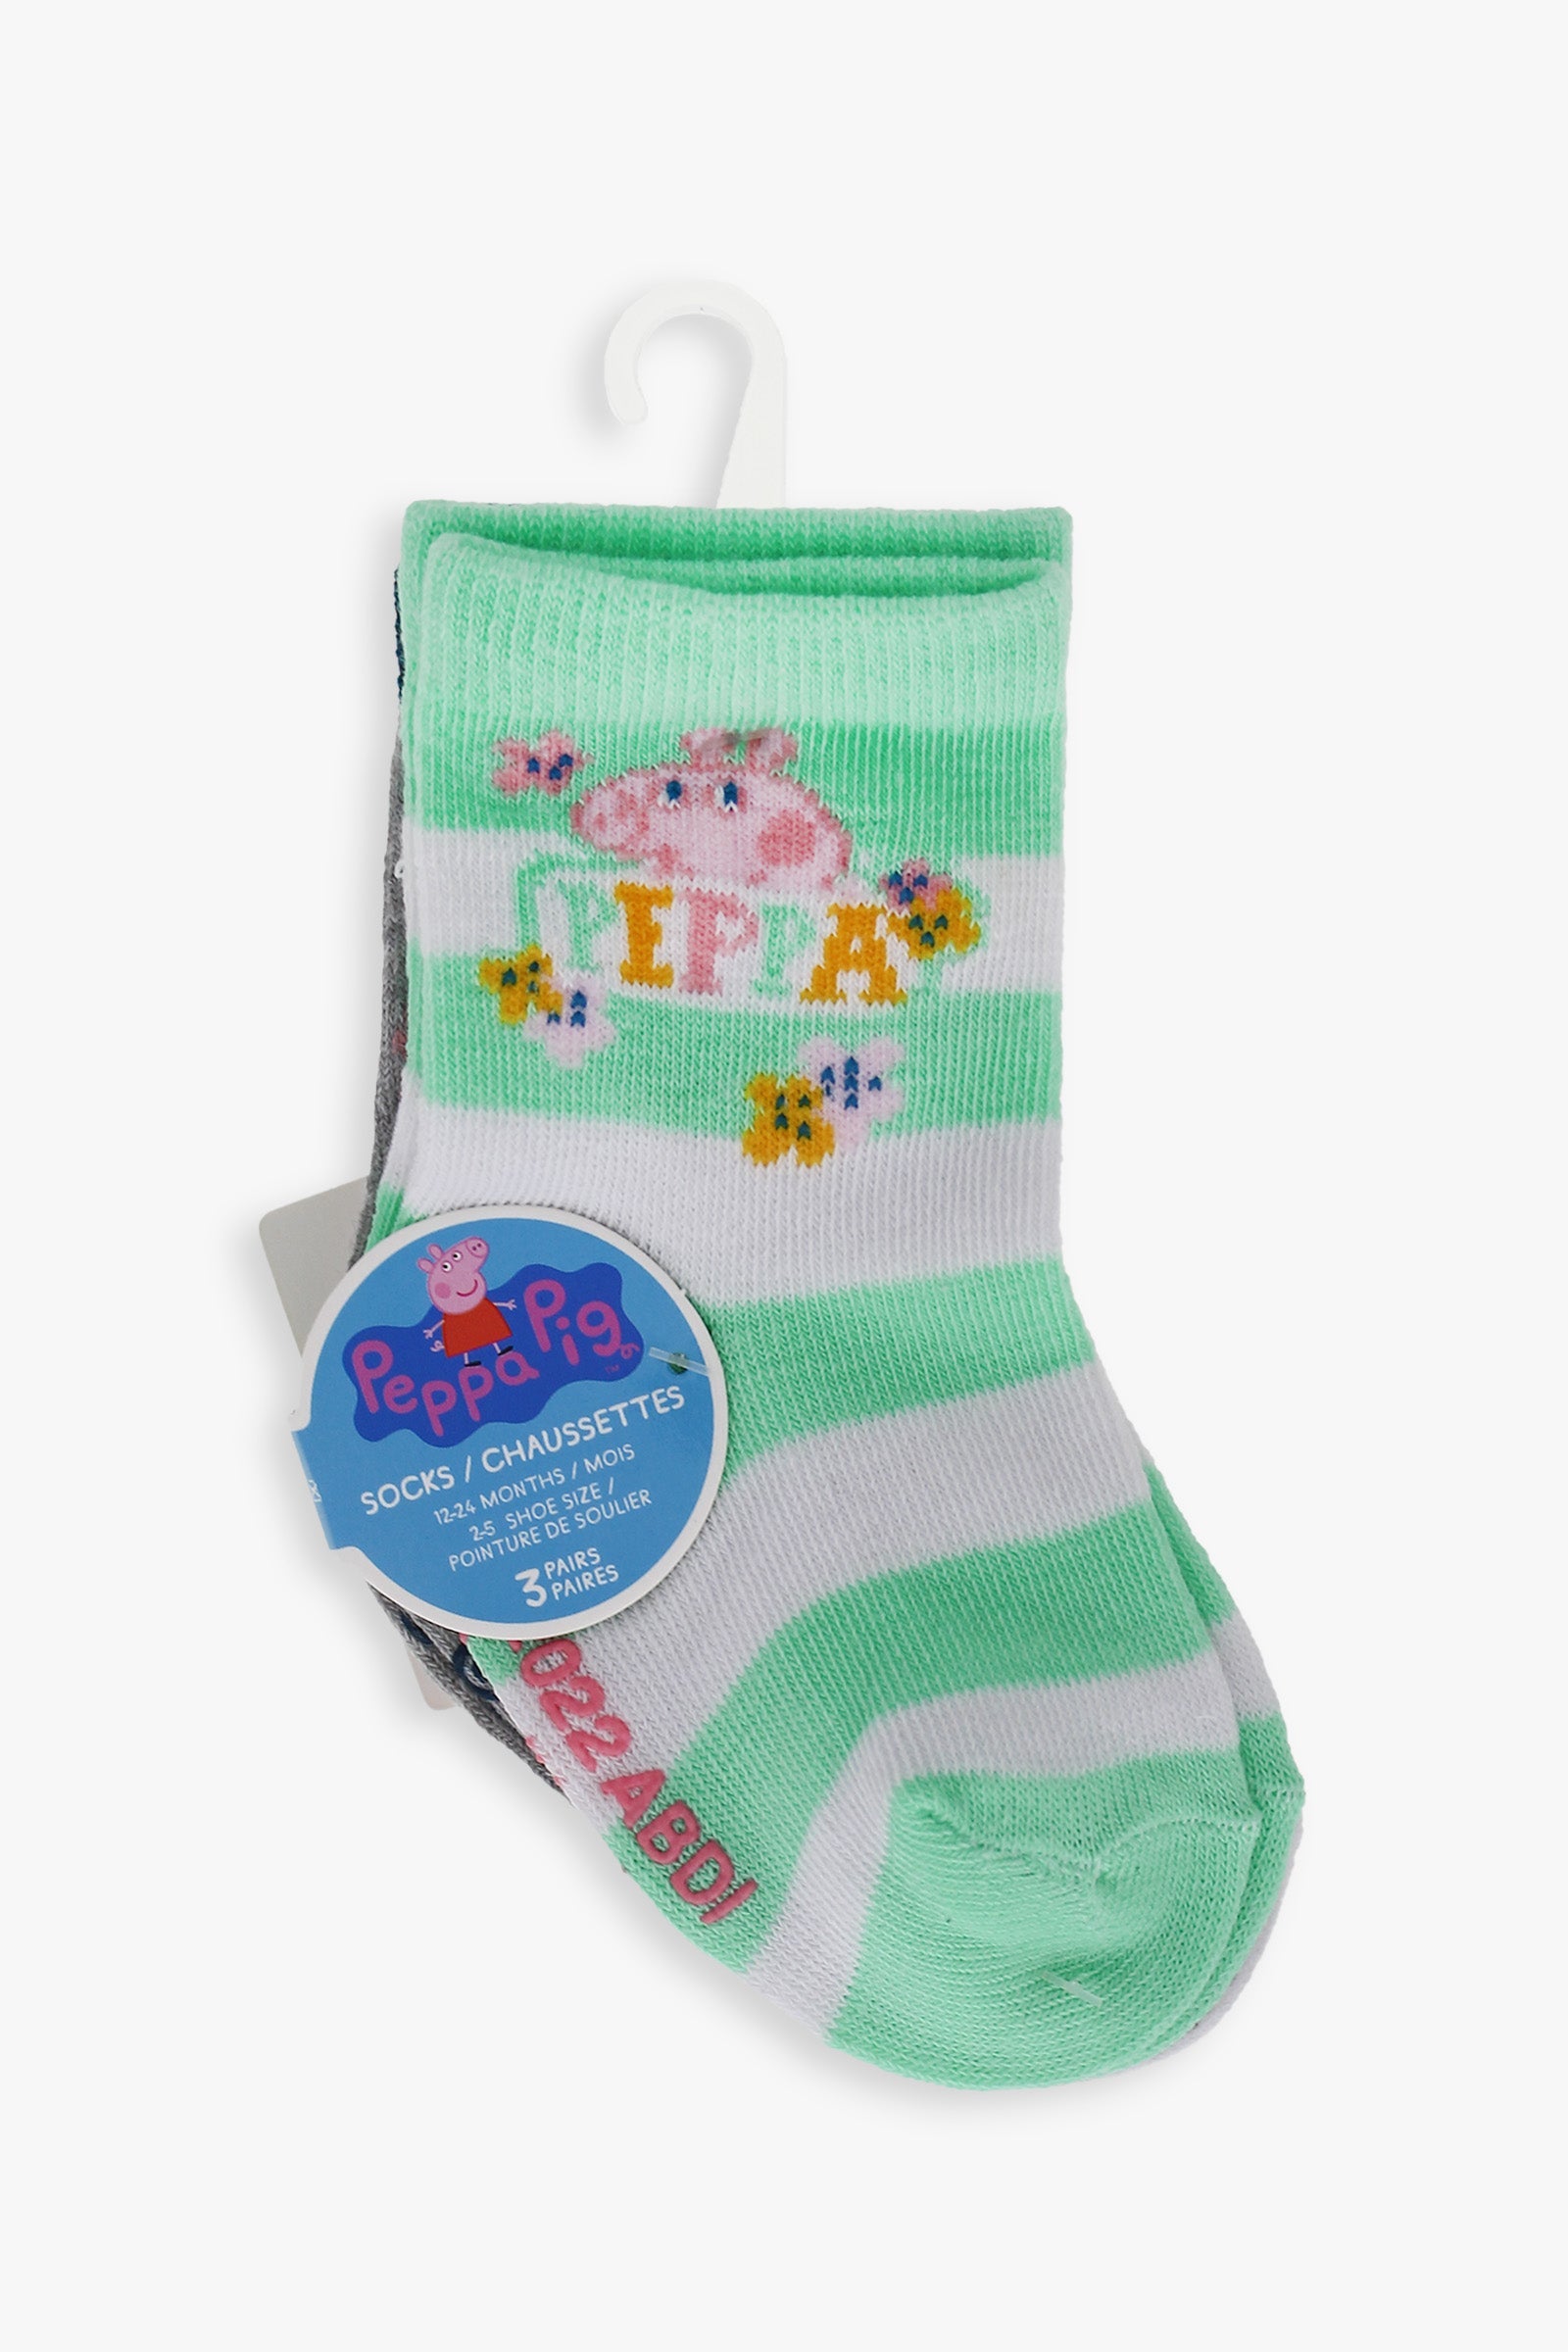 Gertex Peppa Pig Infant 3-Pack Crew Socks | Size 12-24 Months